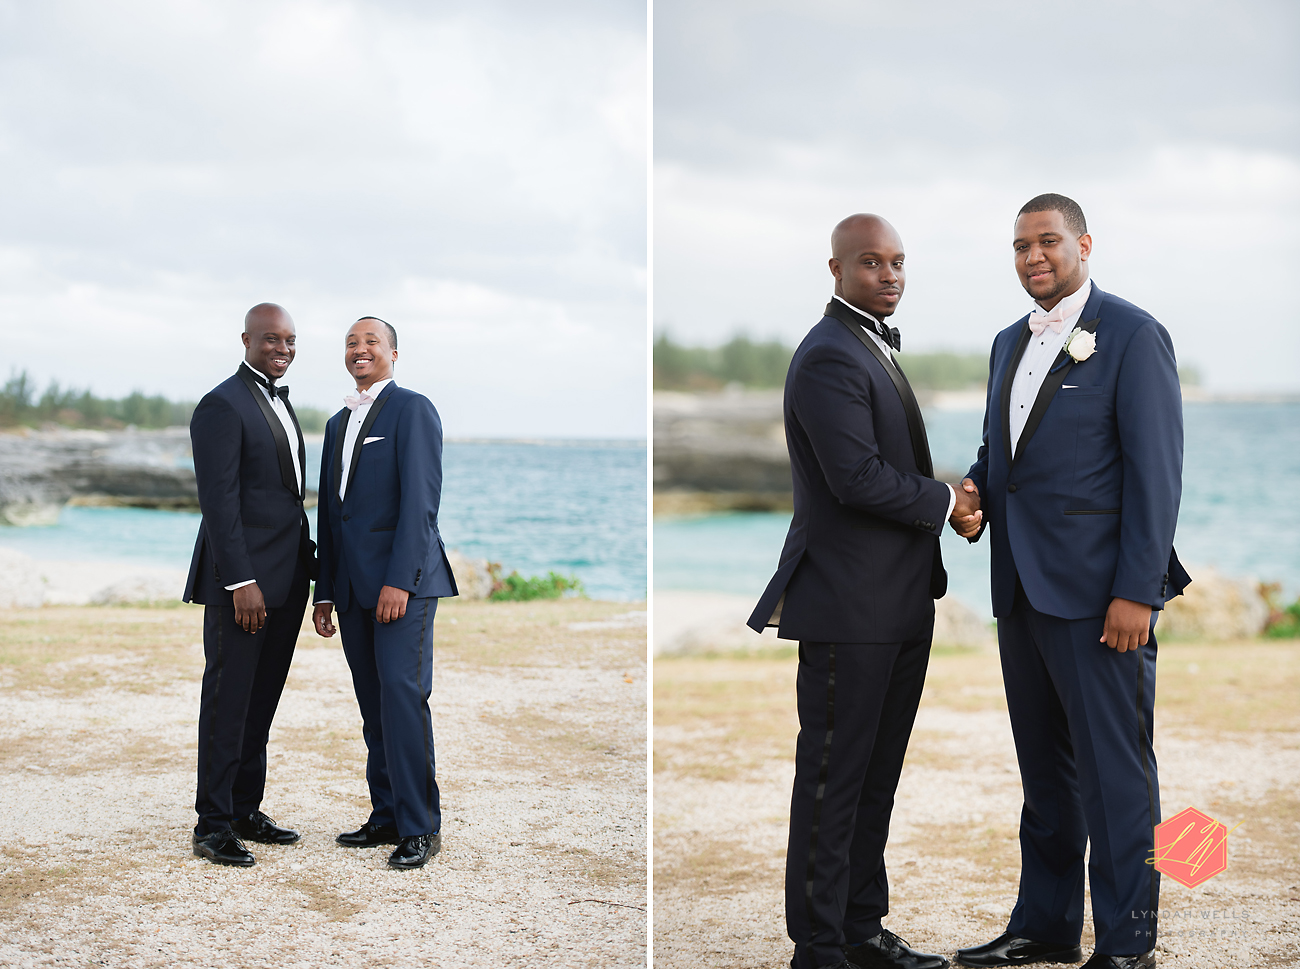 Grand bahama nautical wedding, nautical wedding, grand lucayan wedding, bahamas wedding, lyndah wells photography